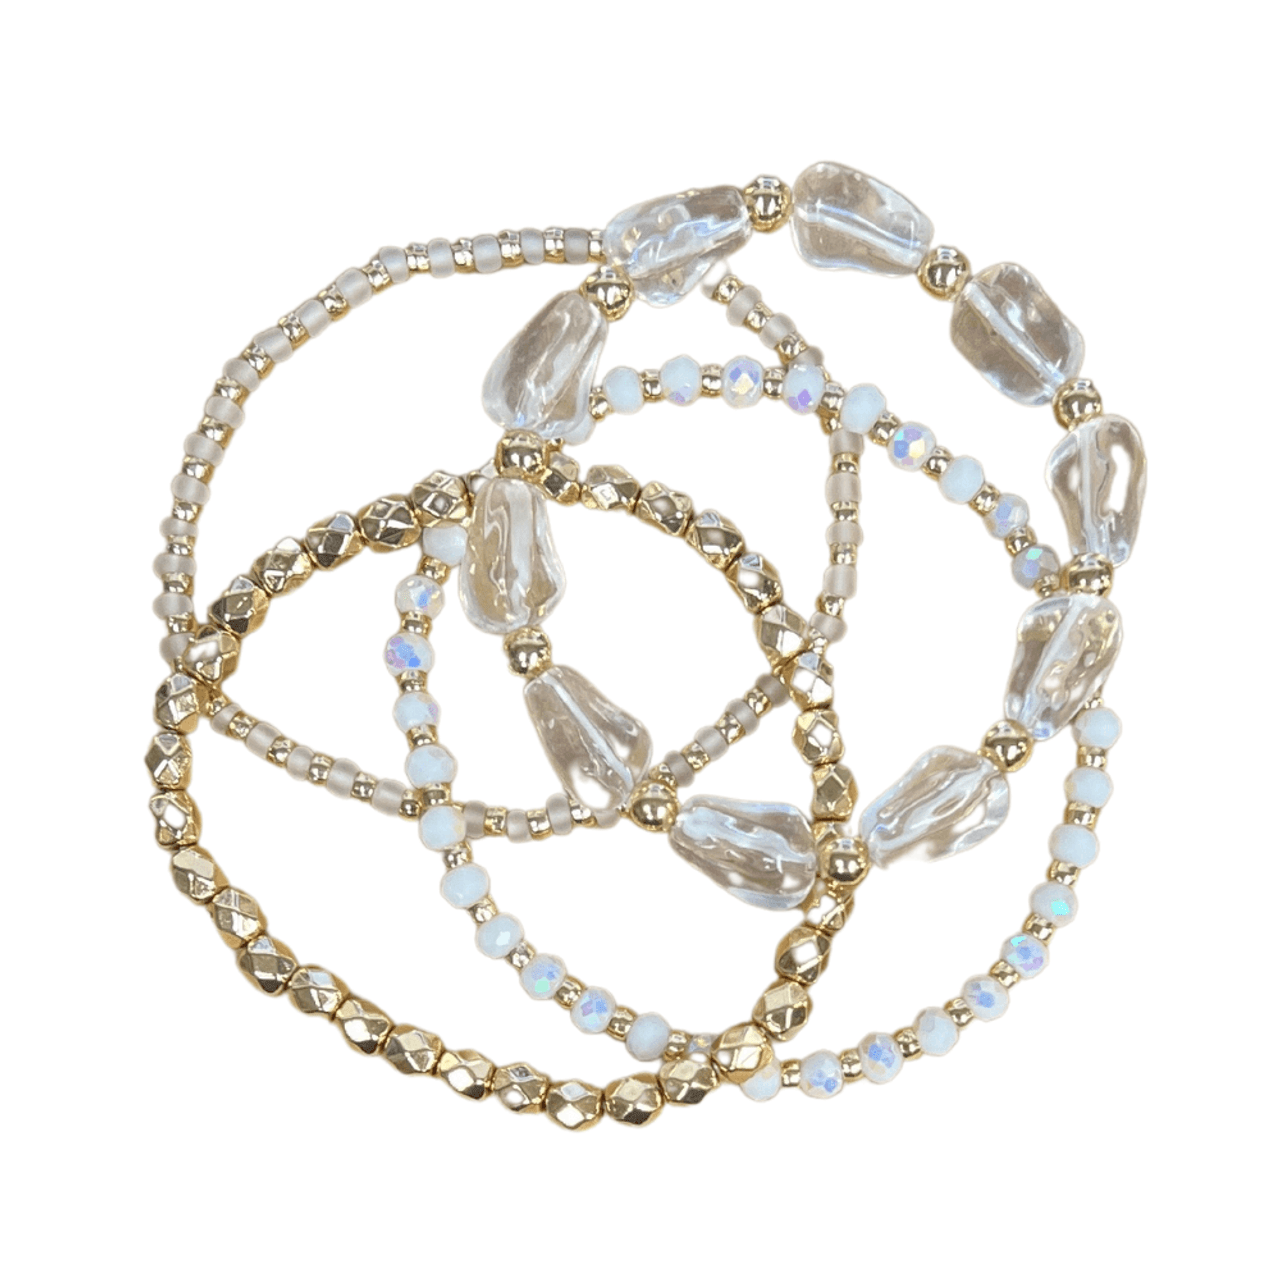 Lou & Co Set of 4 Beaded Stretch Bracelets White